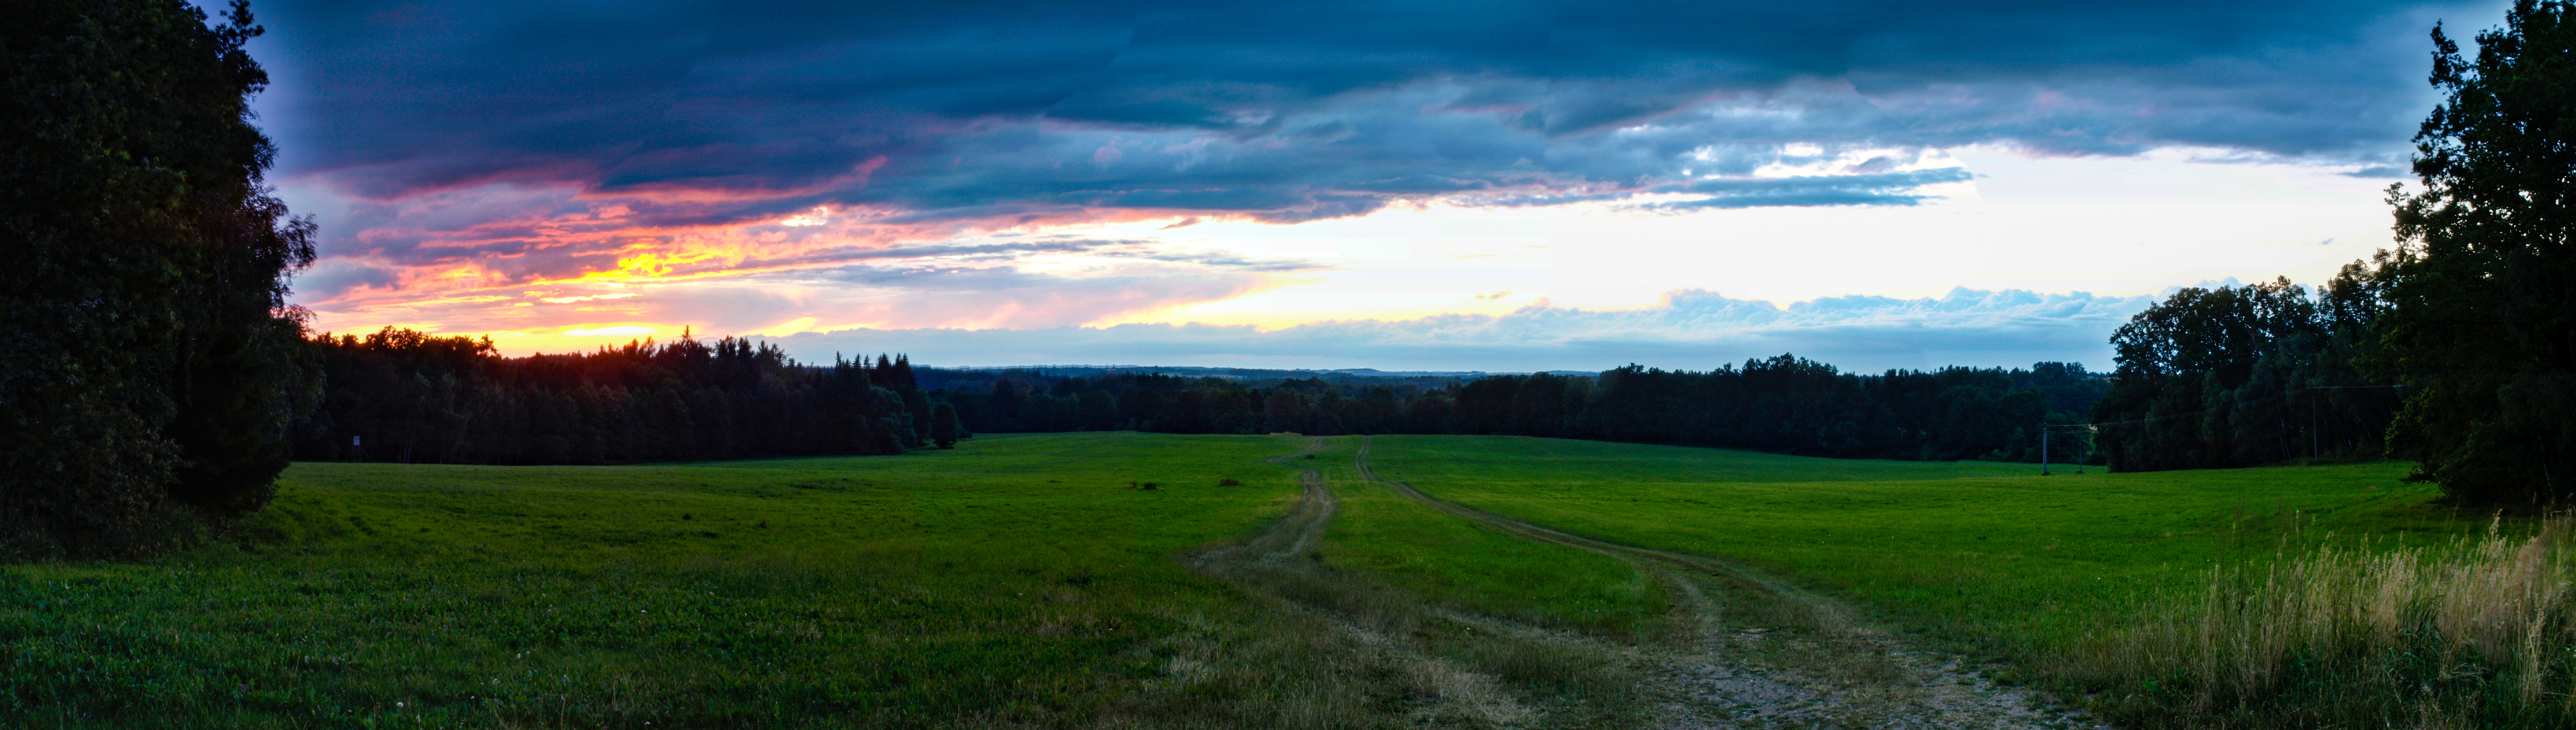 Sunset HDR panorama by AdamJanecek